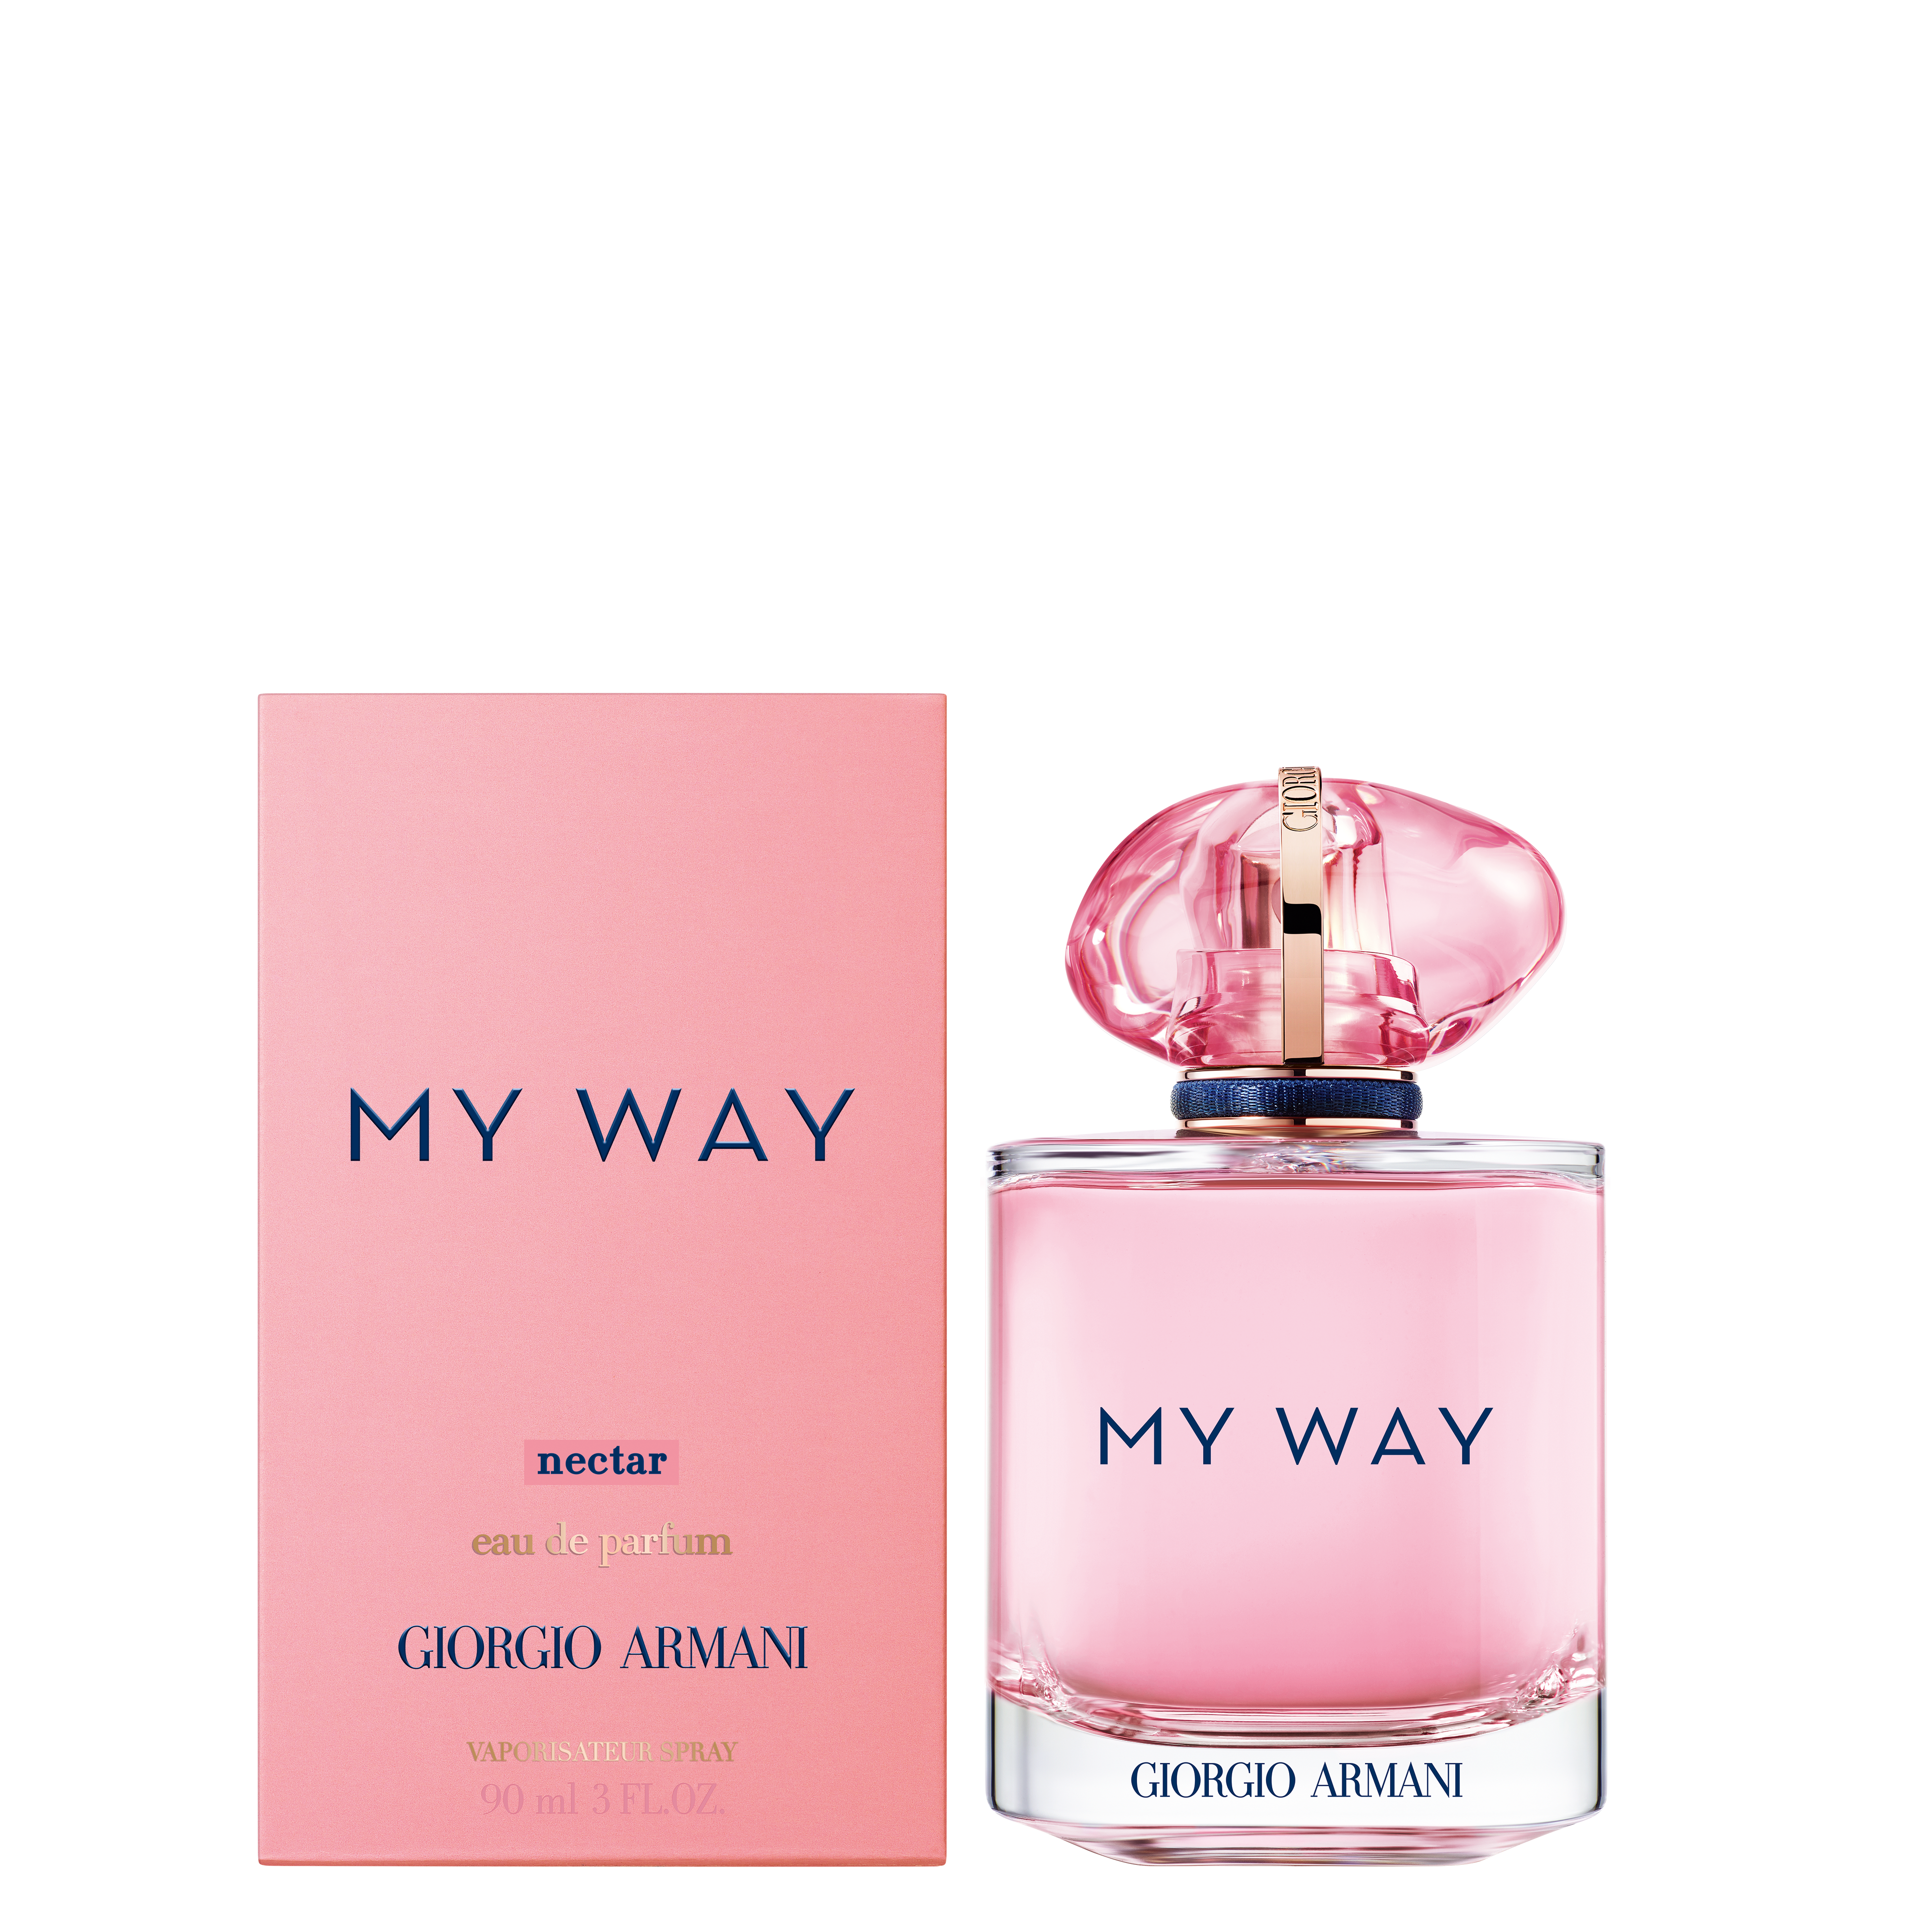 Armani My Way Eau de Parfum Nectar 90ml